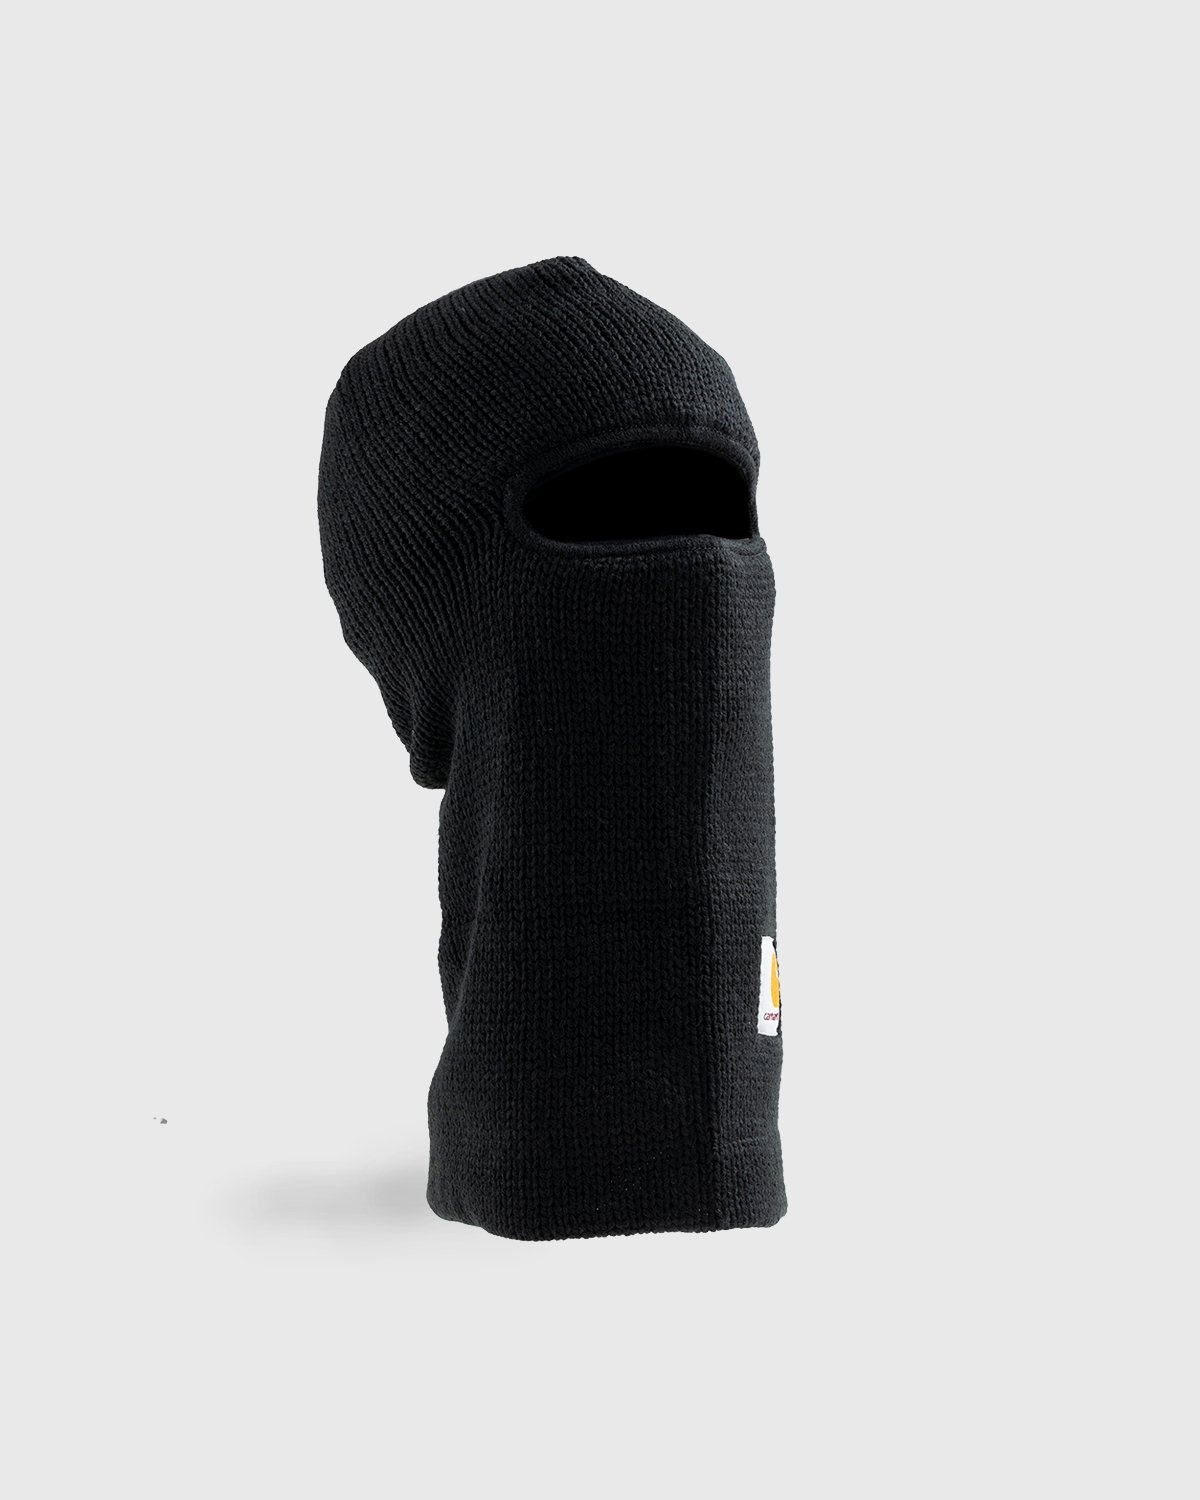 Carhartt WIP – Storm Mask Black - Hats - Black - Image 2